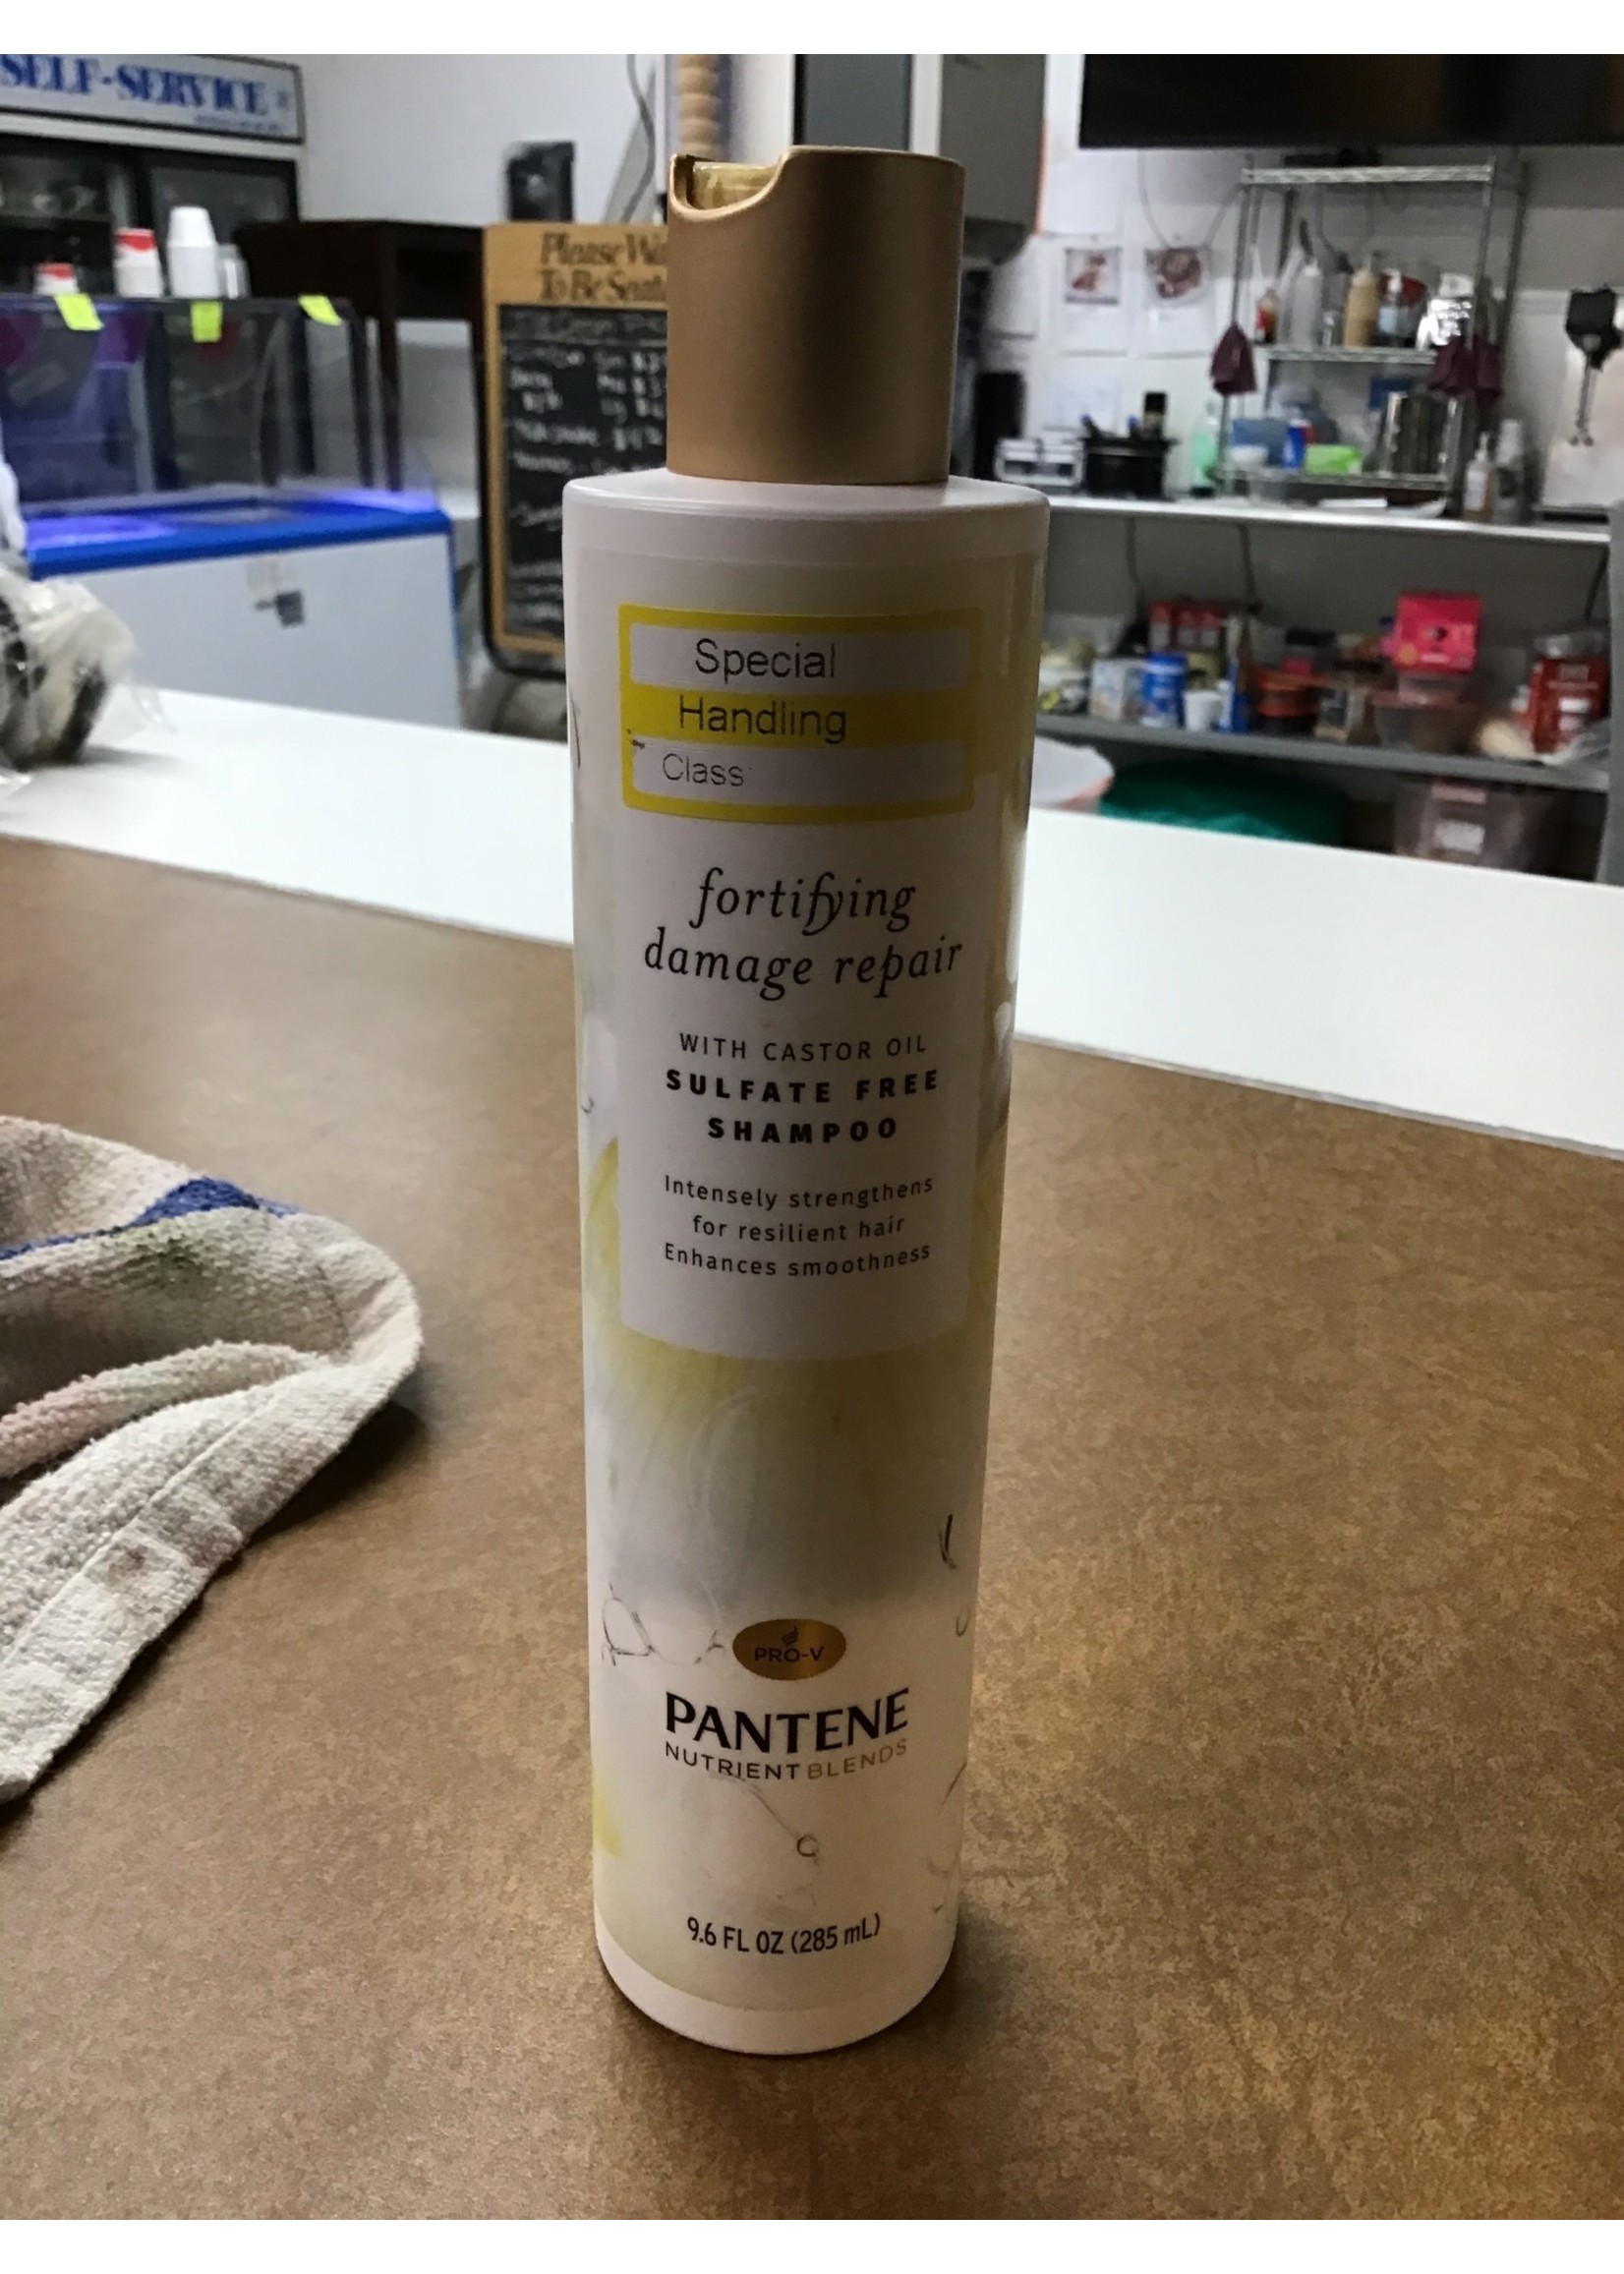 Pantene Nutrient Blends Repair with Castor Oil Shampoo - 9.6 fl oz